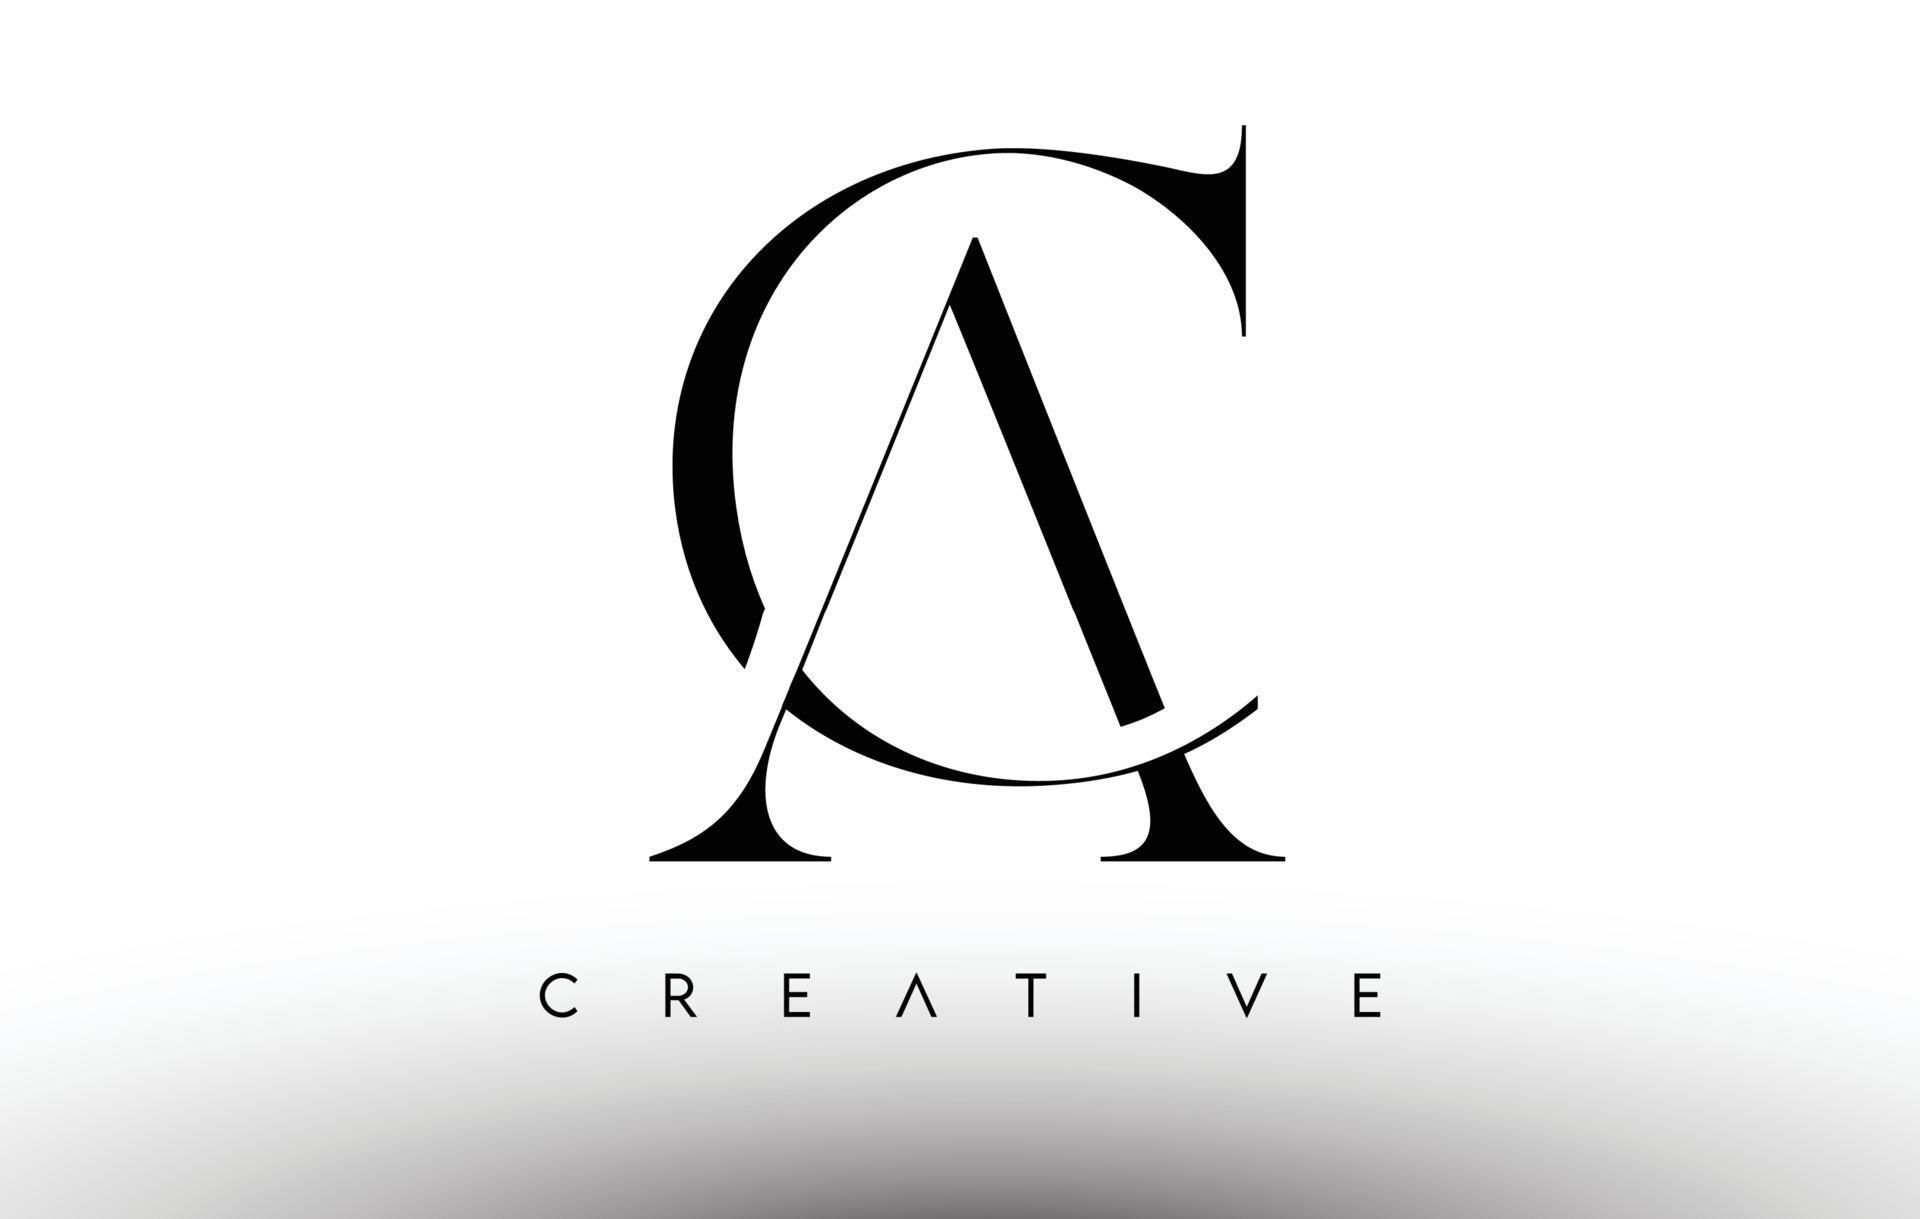 CA Minimalist Serif Modern Letter Logo in Black and White. AC Creative ...